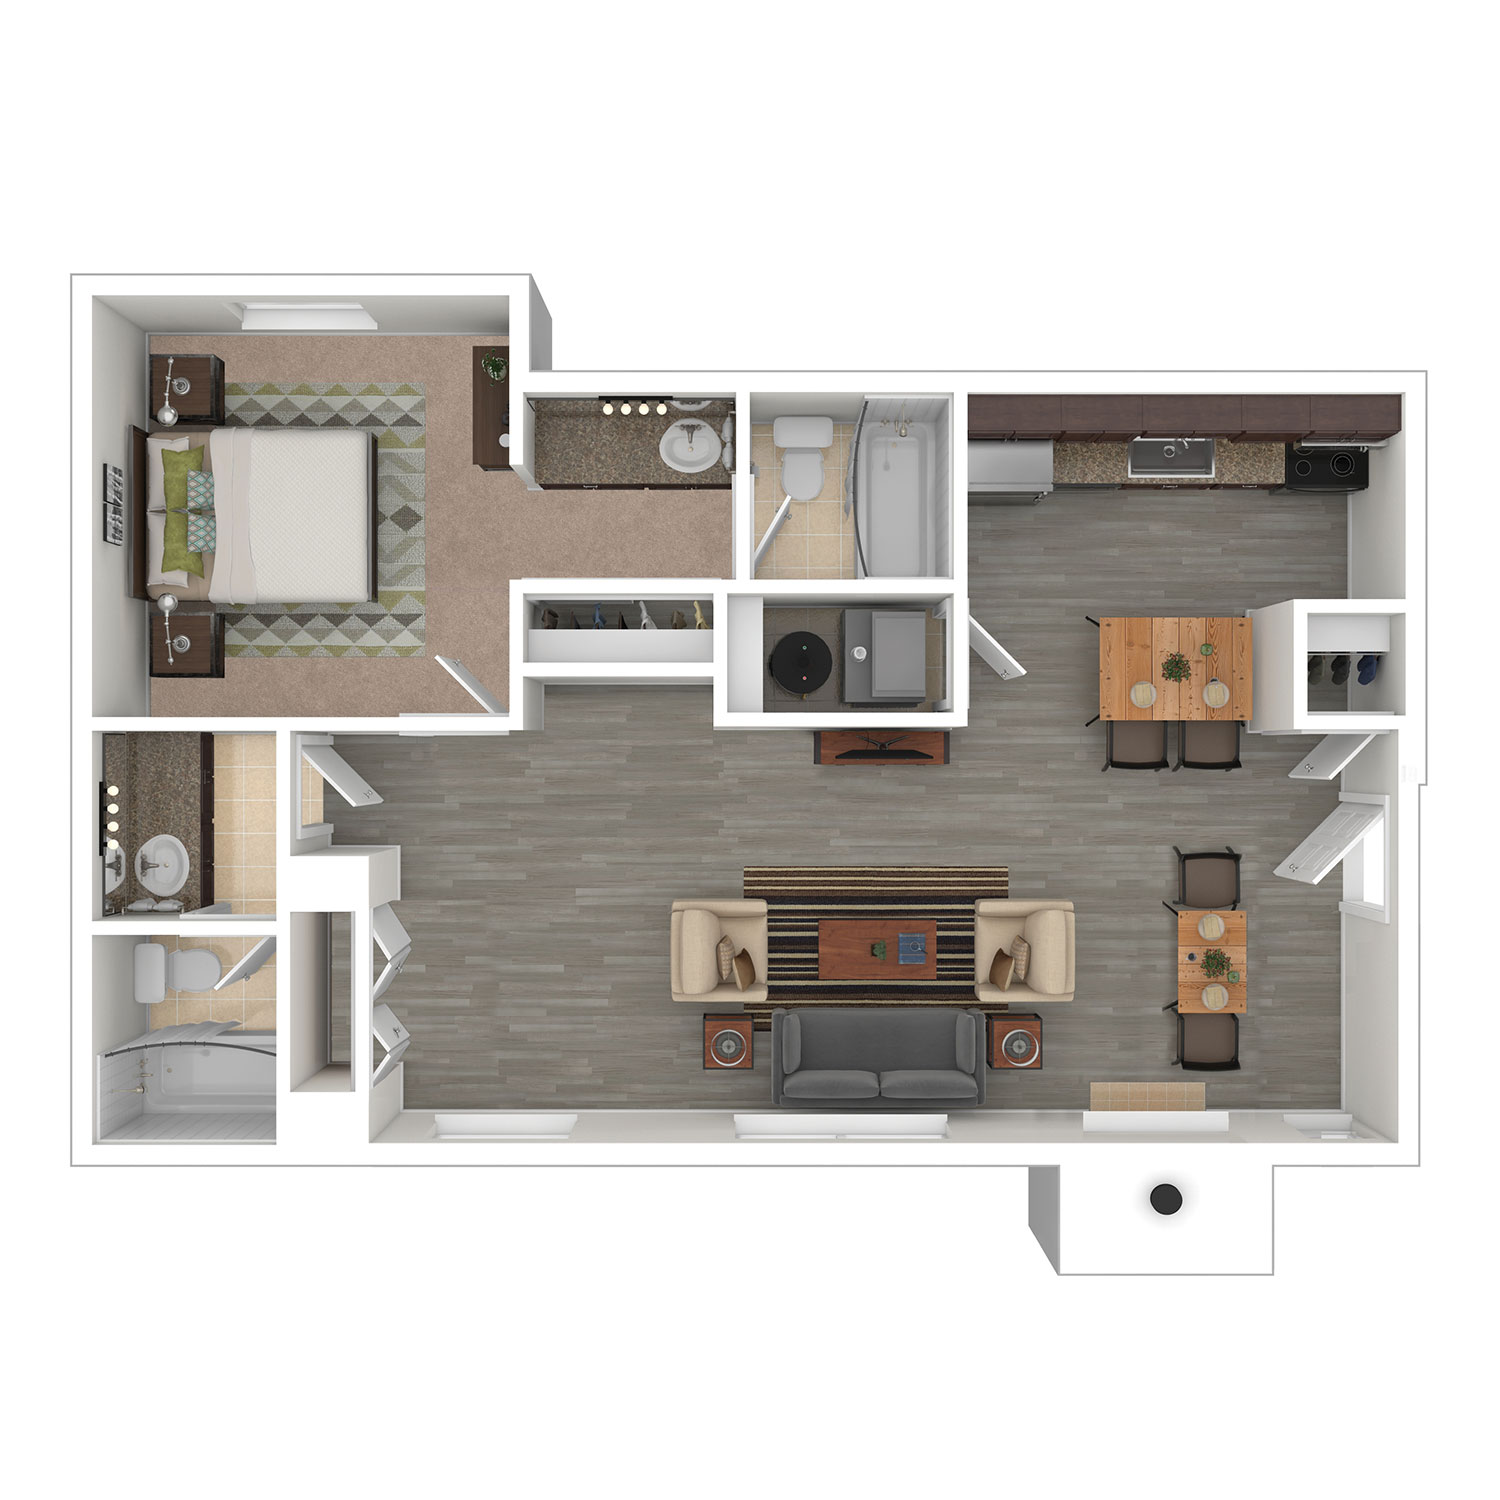 A - 1 bedroom, 2 bathroom floor plan